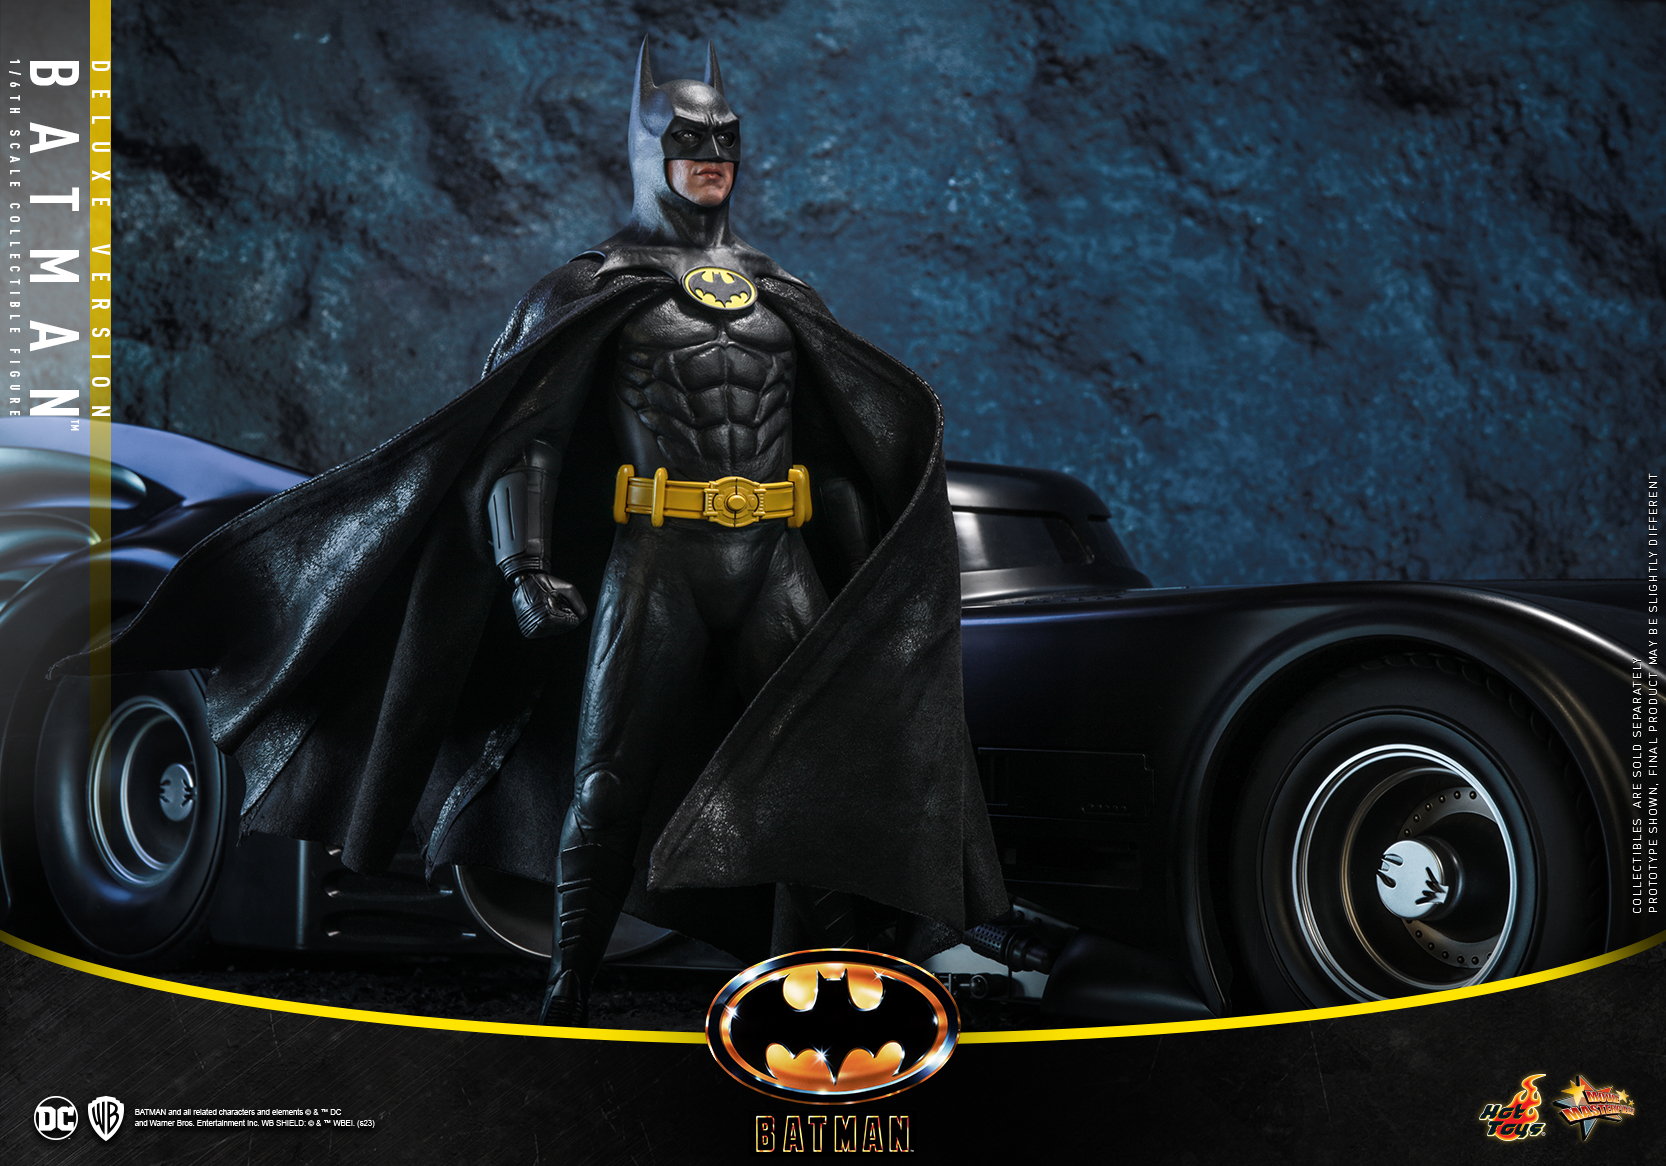 Hot Toys Releasing Tim Burton's '89 Batman and Batmobile